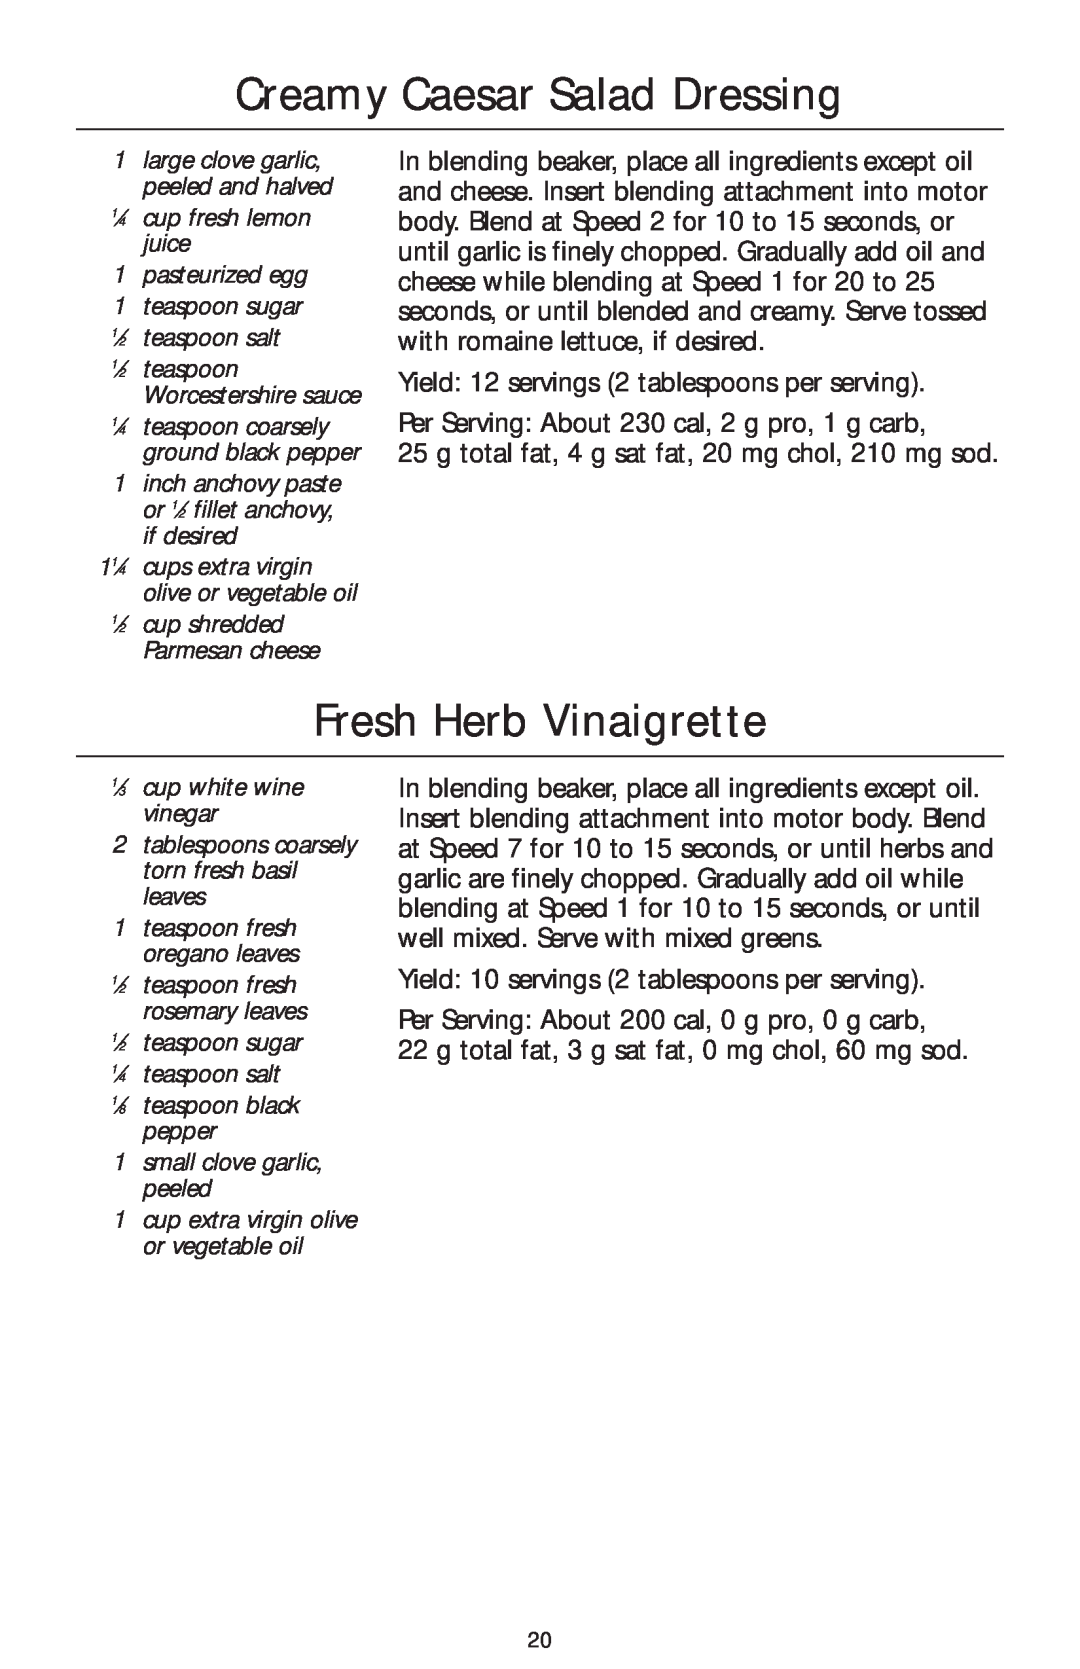 KitchenAid KHB200, KHB100, KHB300 manual Creamy Caesar Salad Dressing, Fresh Herb Vinaigrette 